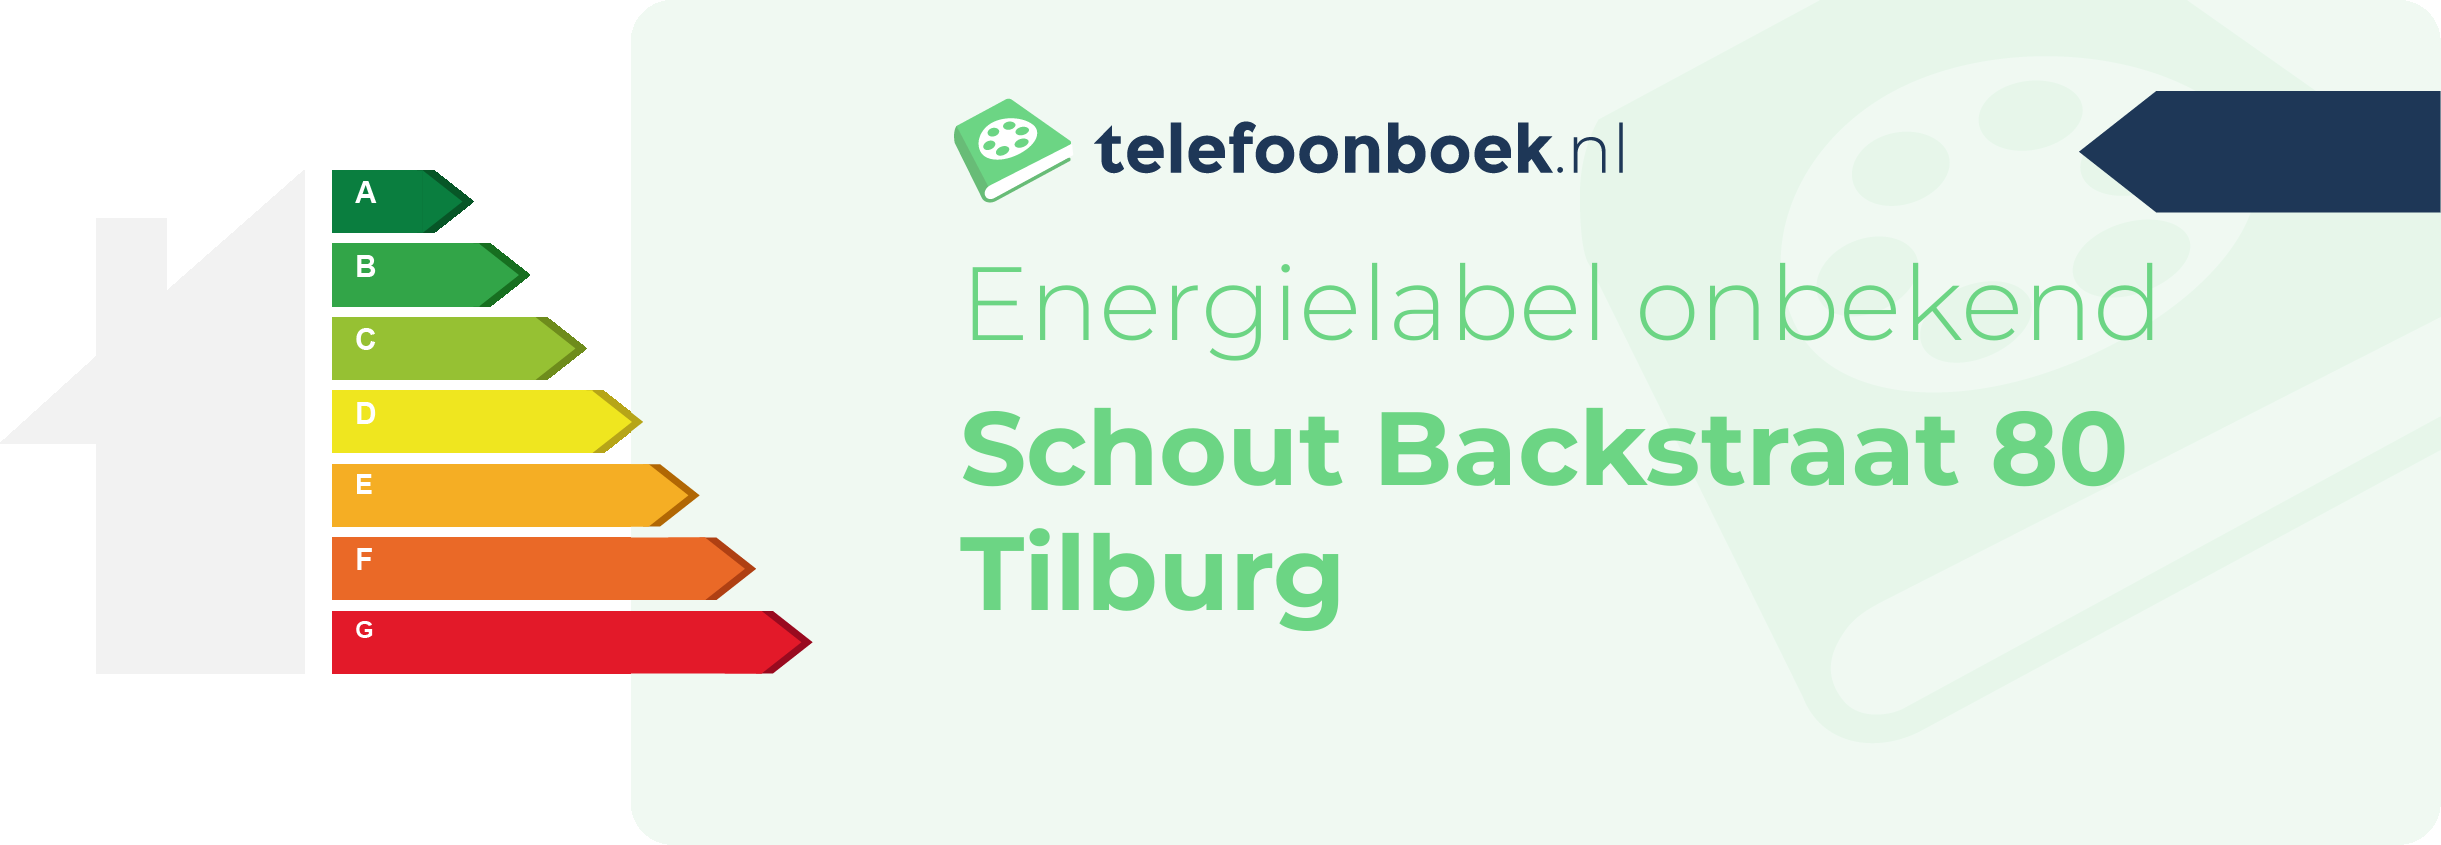 Energielabel Schout Backstraat 80 Tilburg